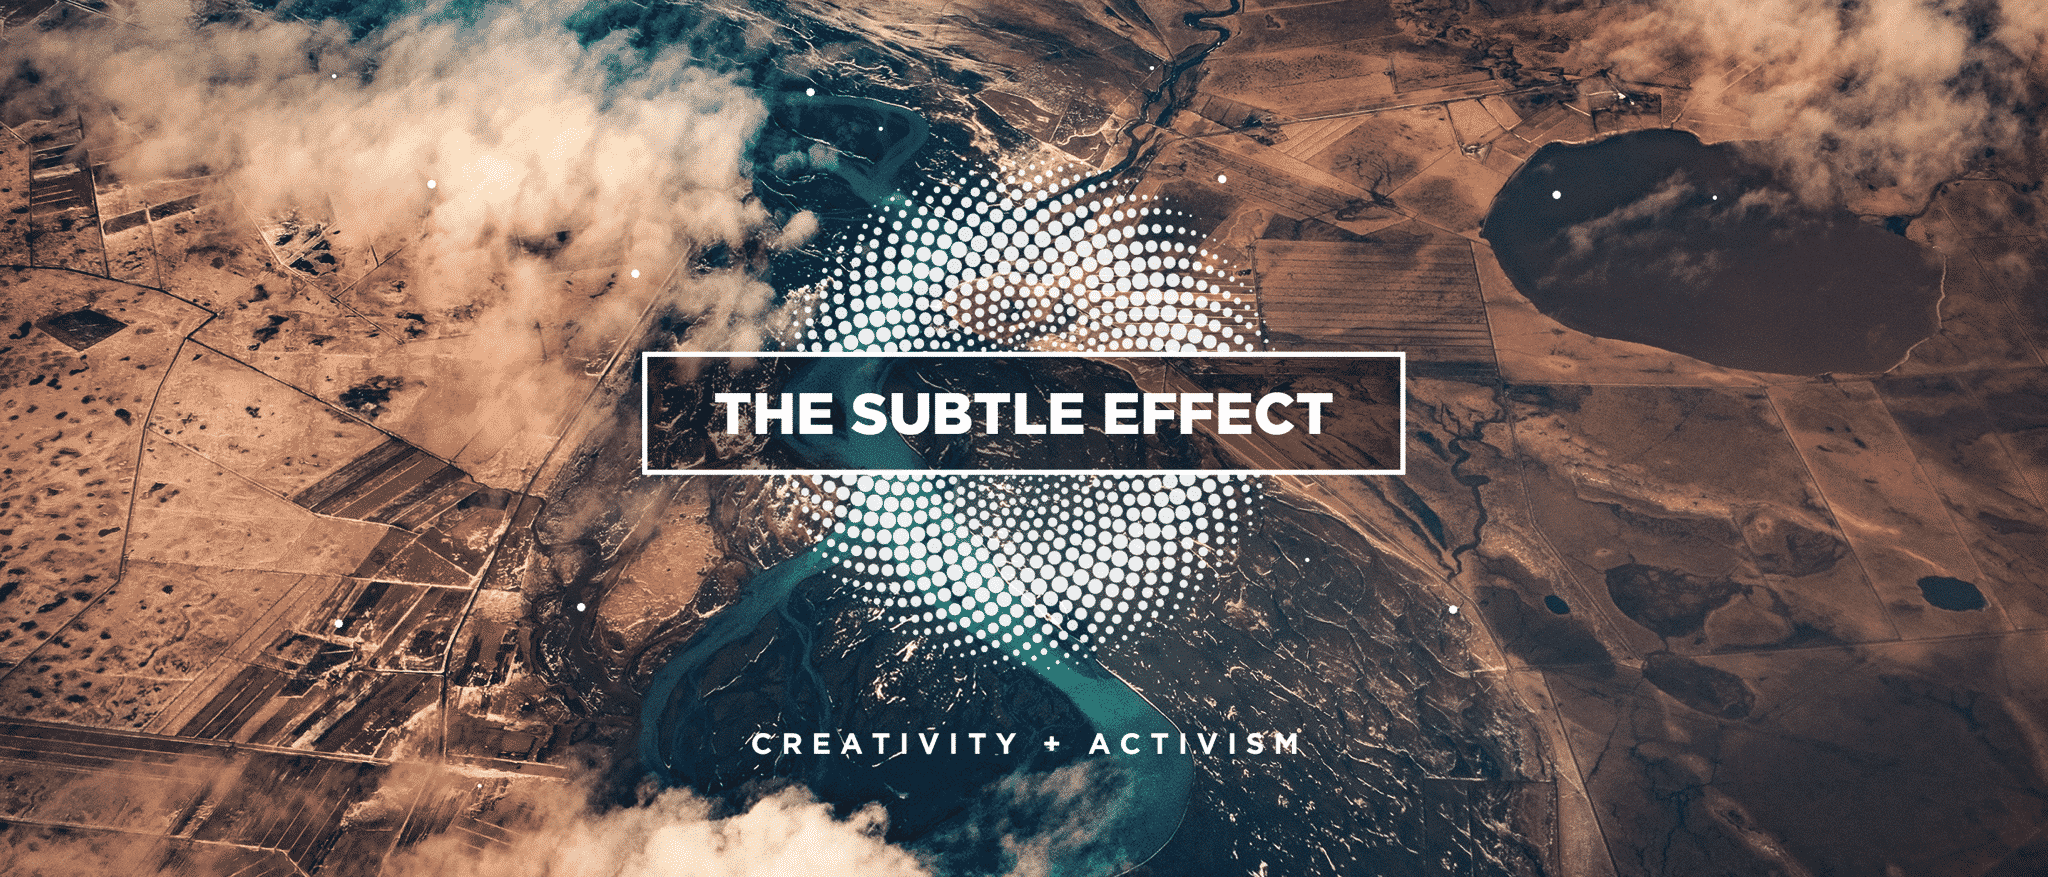 The Subtle Effect Podcast Episodes 2 & 3